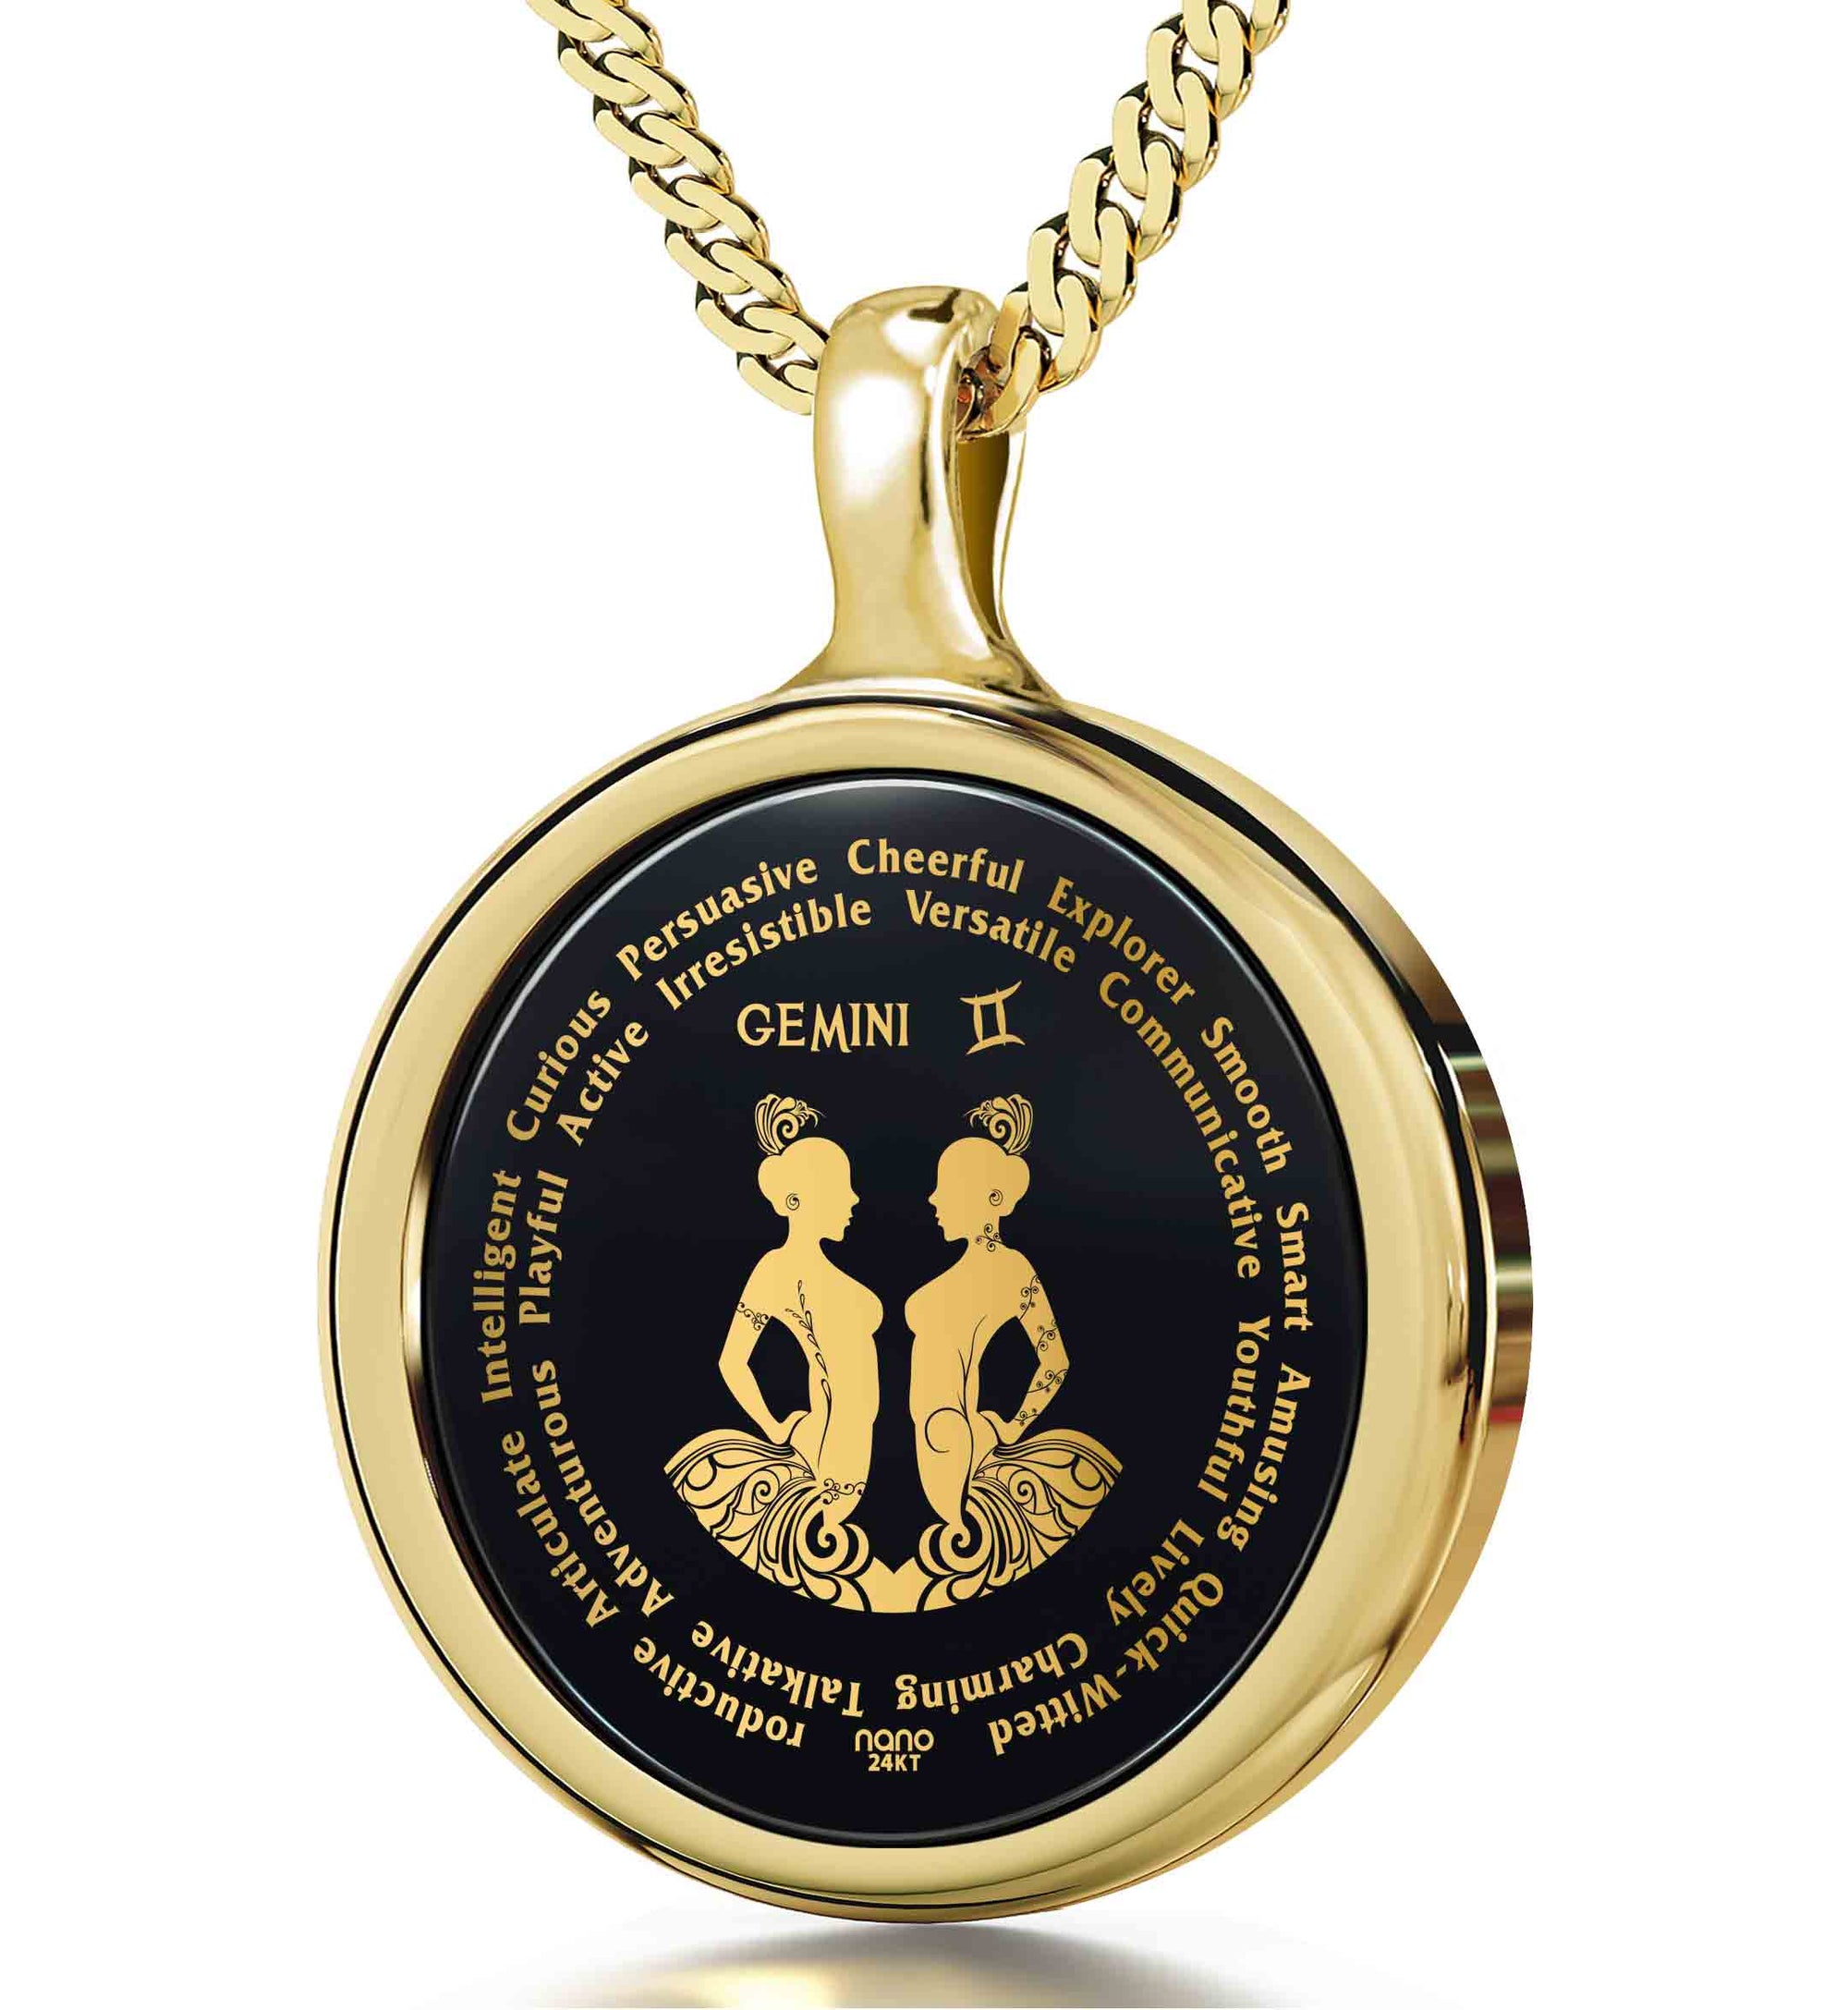 Unique Gemini Necklaces for Lovers of the Zodiac | NanoStyle Jewelry